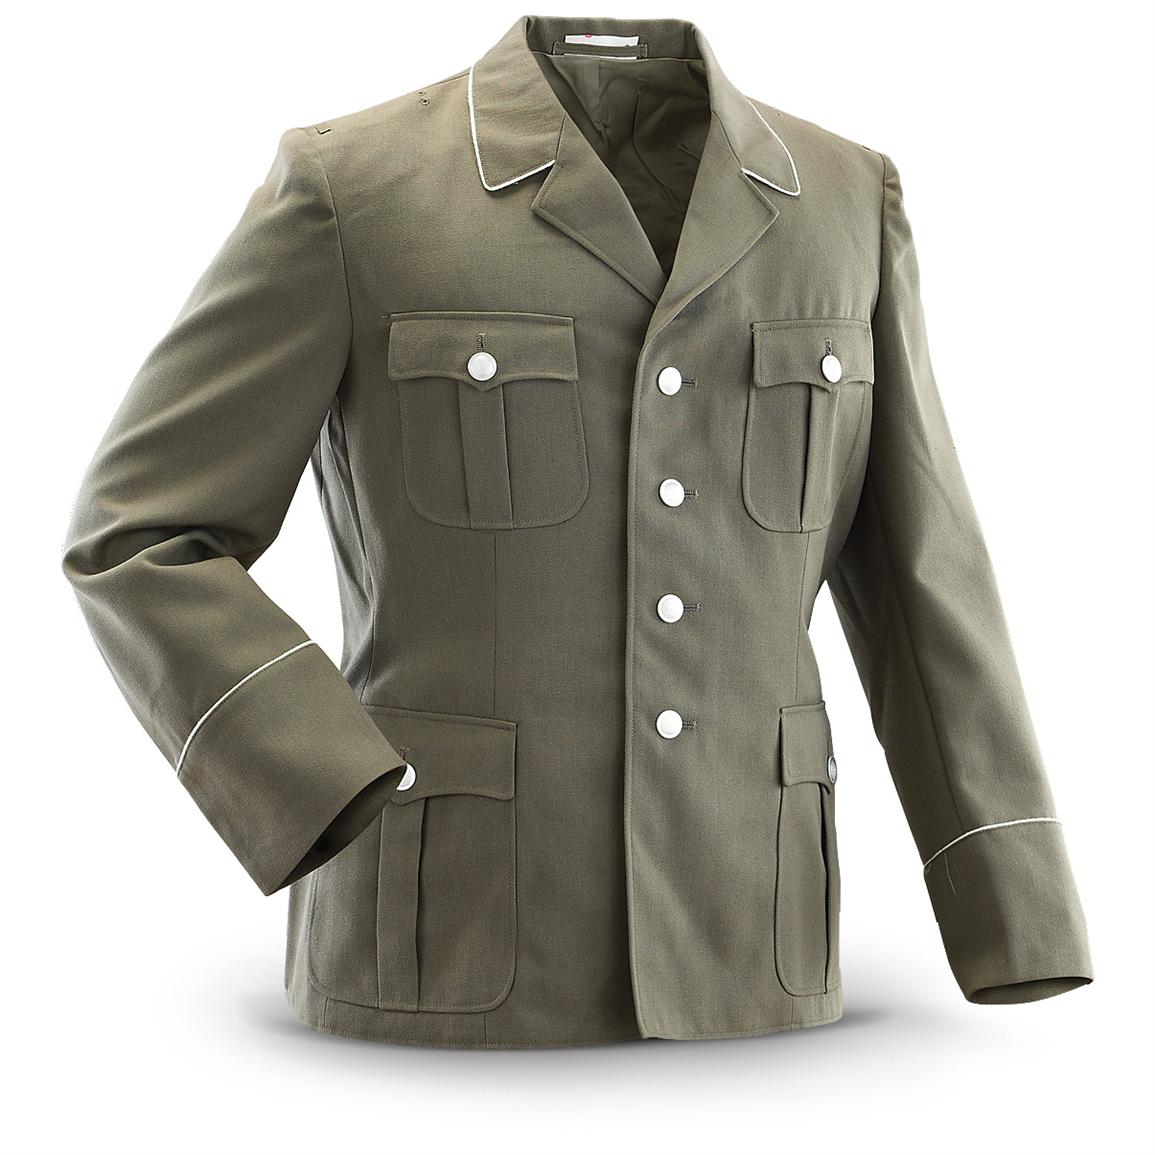 New East German Military NVA Officer's Jacket, Khaki - 211275, Pea